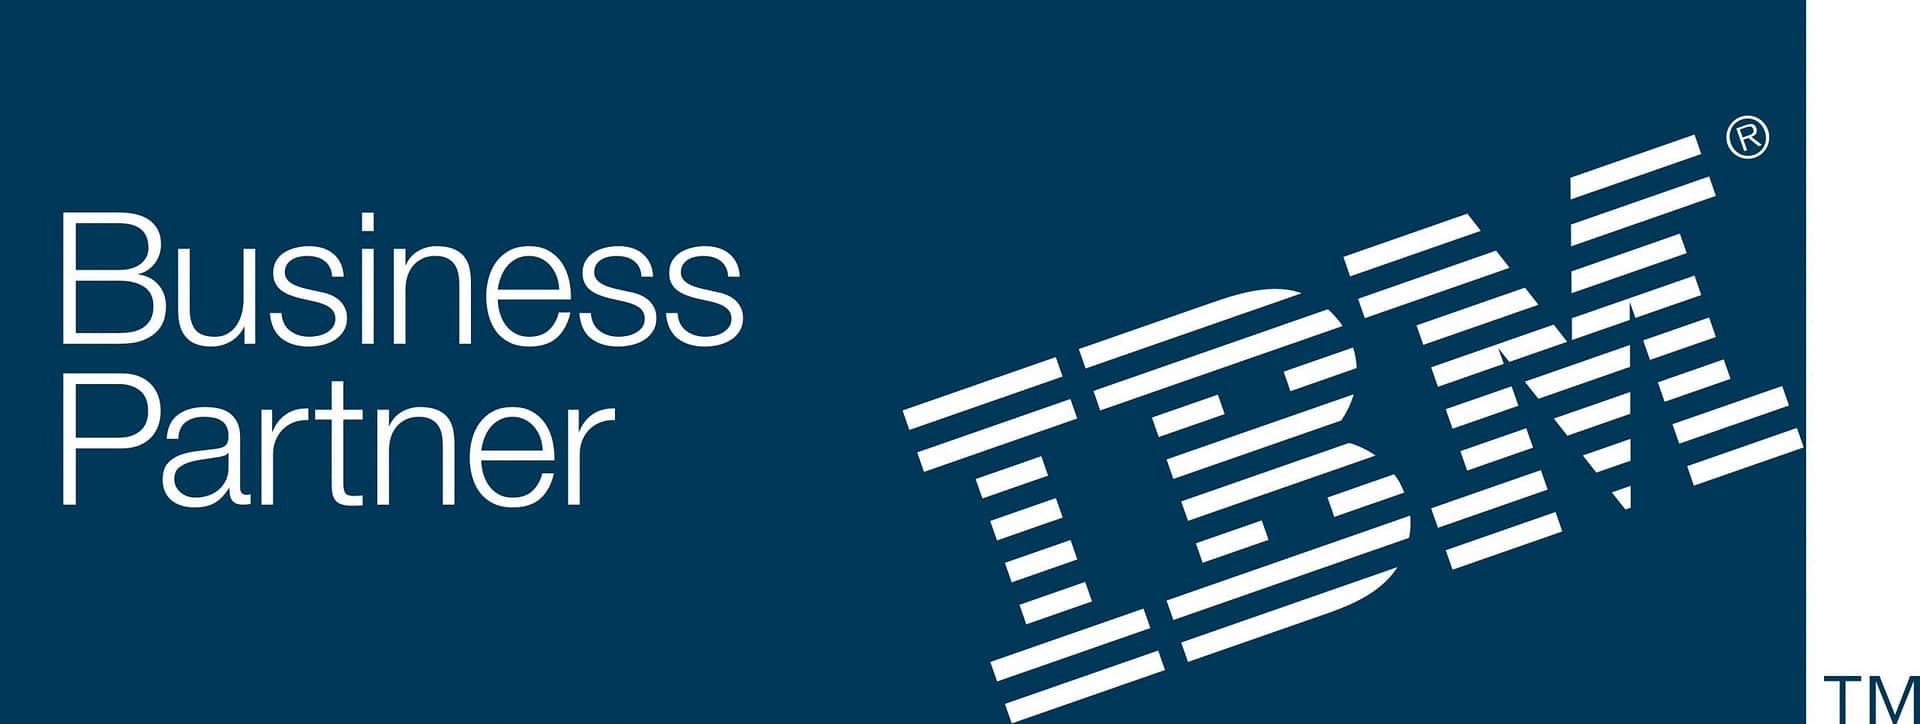 InterForm is IBM business partner output management